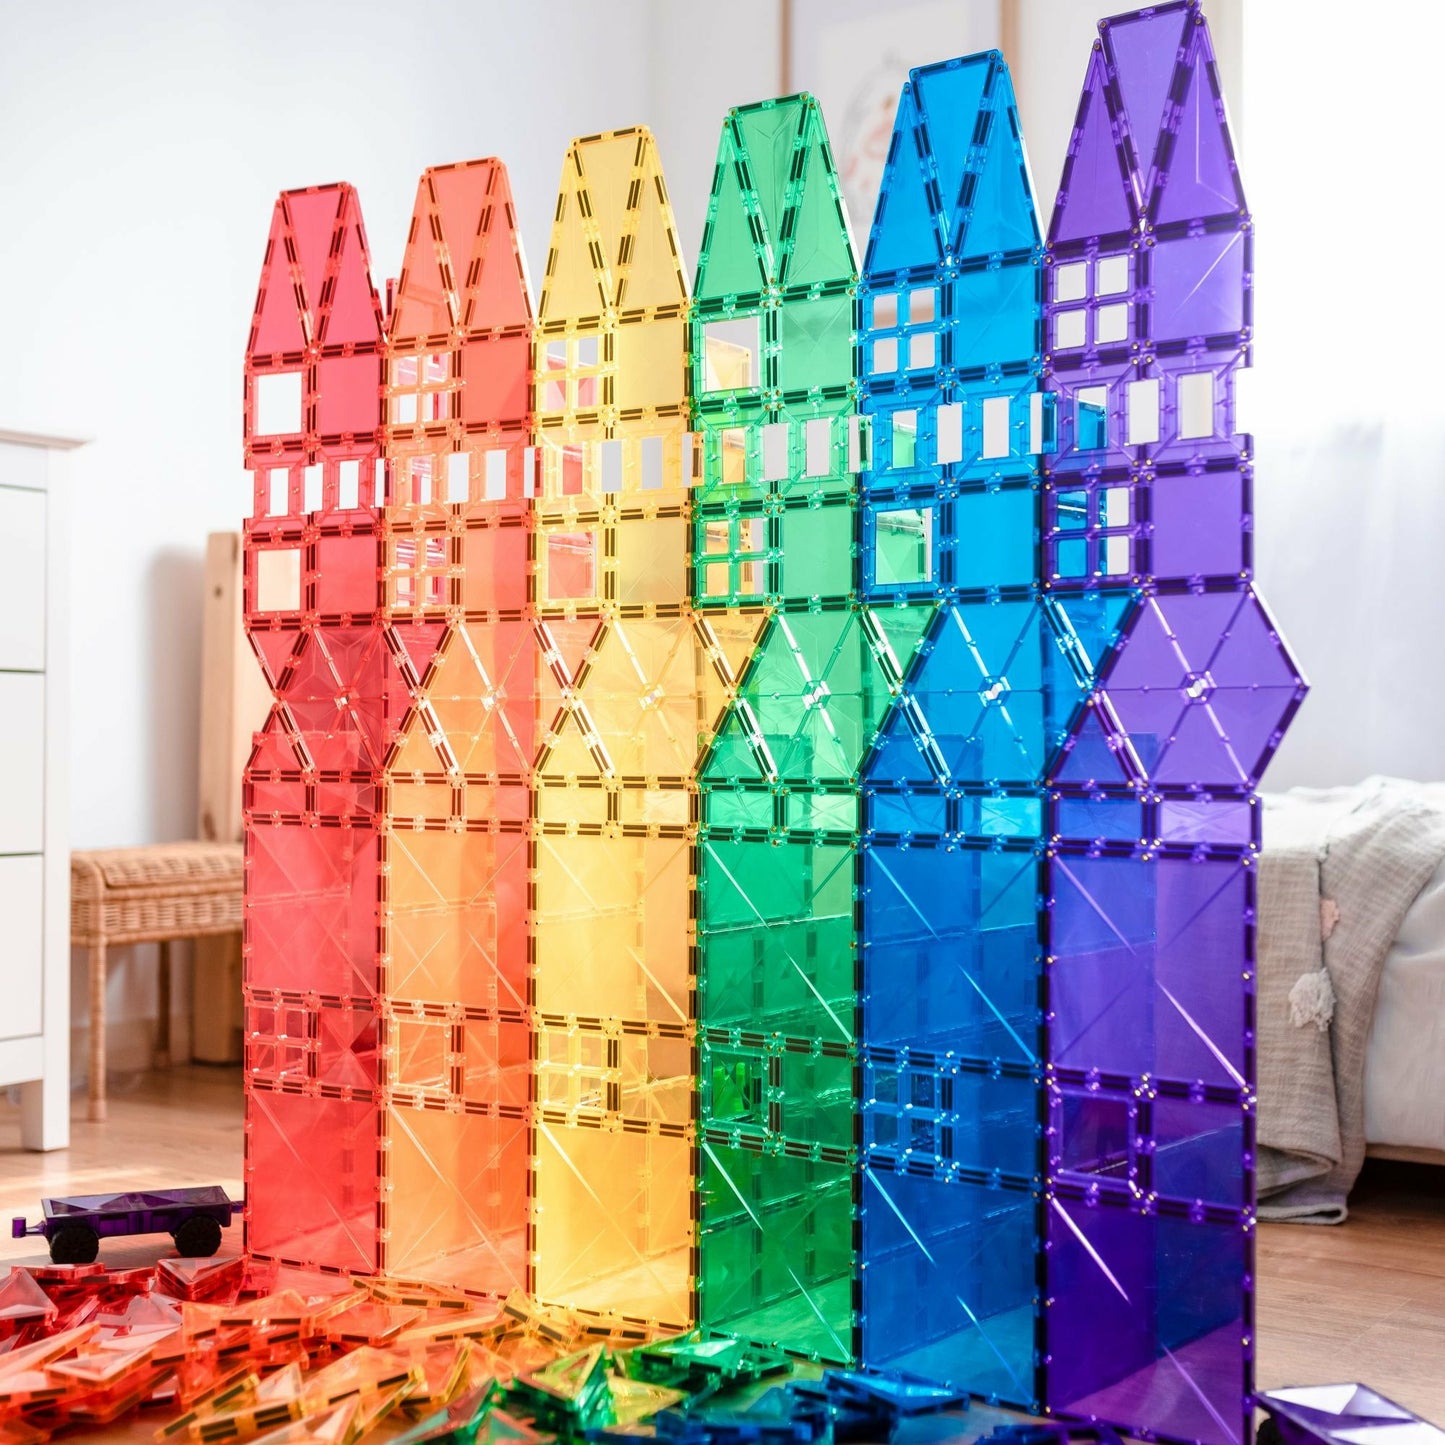 Connetix Rainbow Creativity Mega Set with 212 Pieces